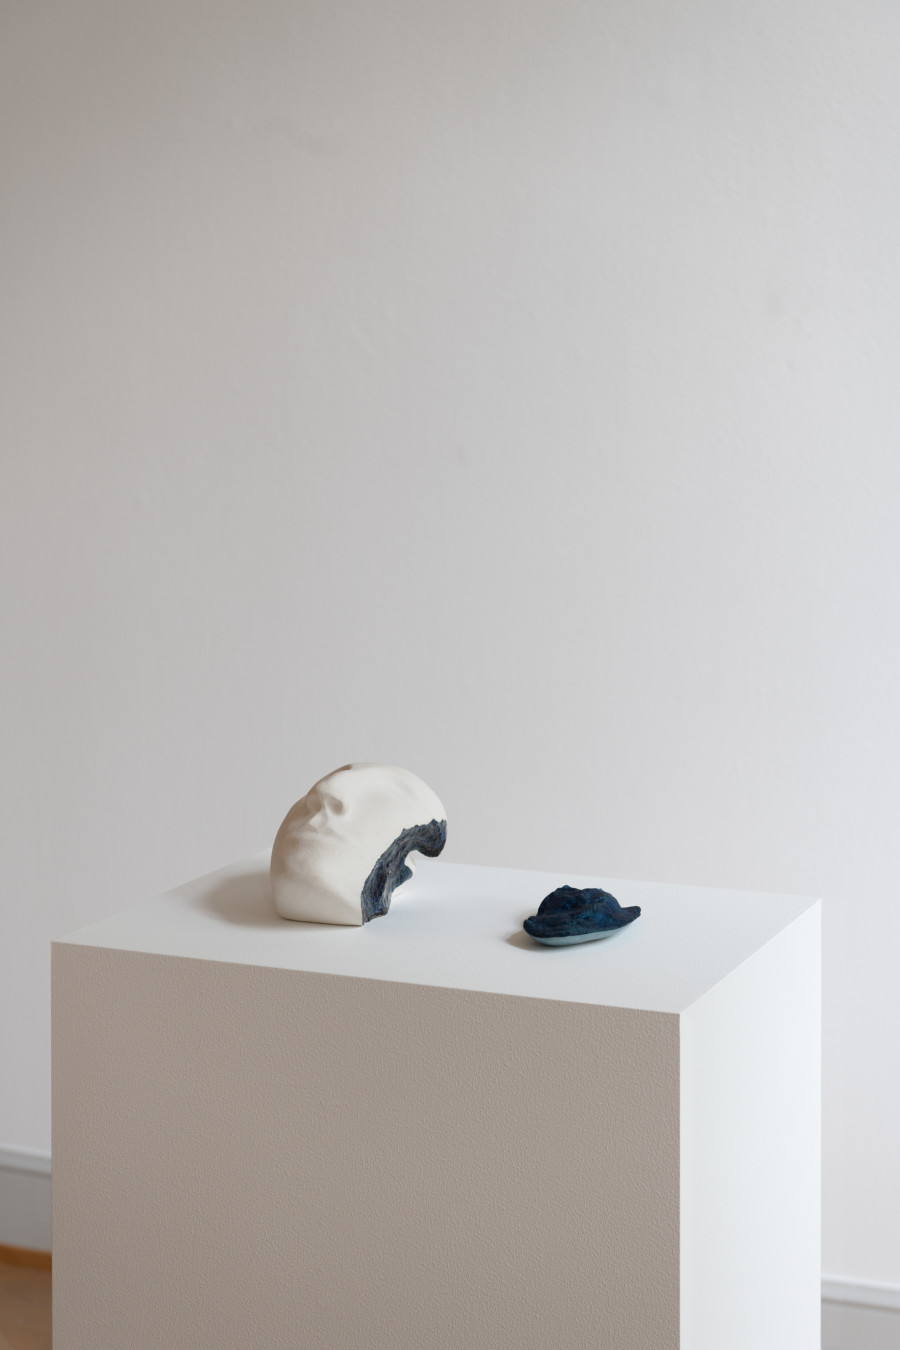 Grace Schwindt, In Two Parts, 2022, Courtesy the artist and Zeno X Gallery, Antwerp, Photo: Sebastian Stadler